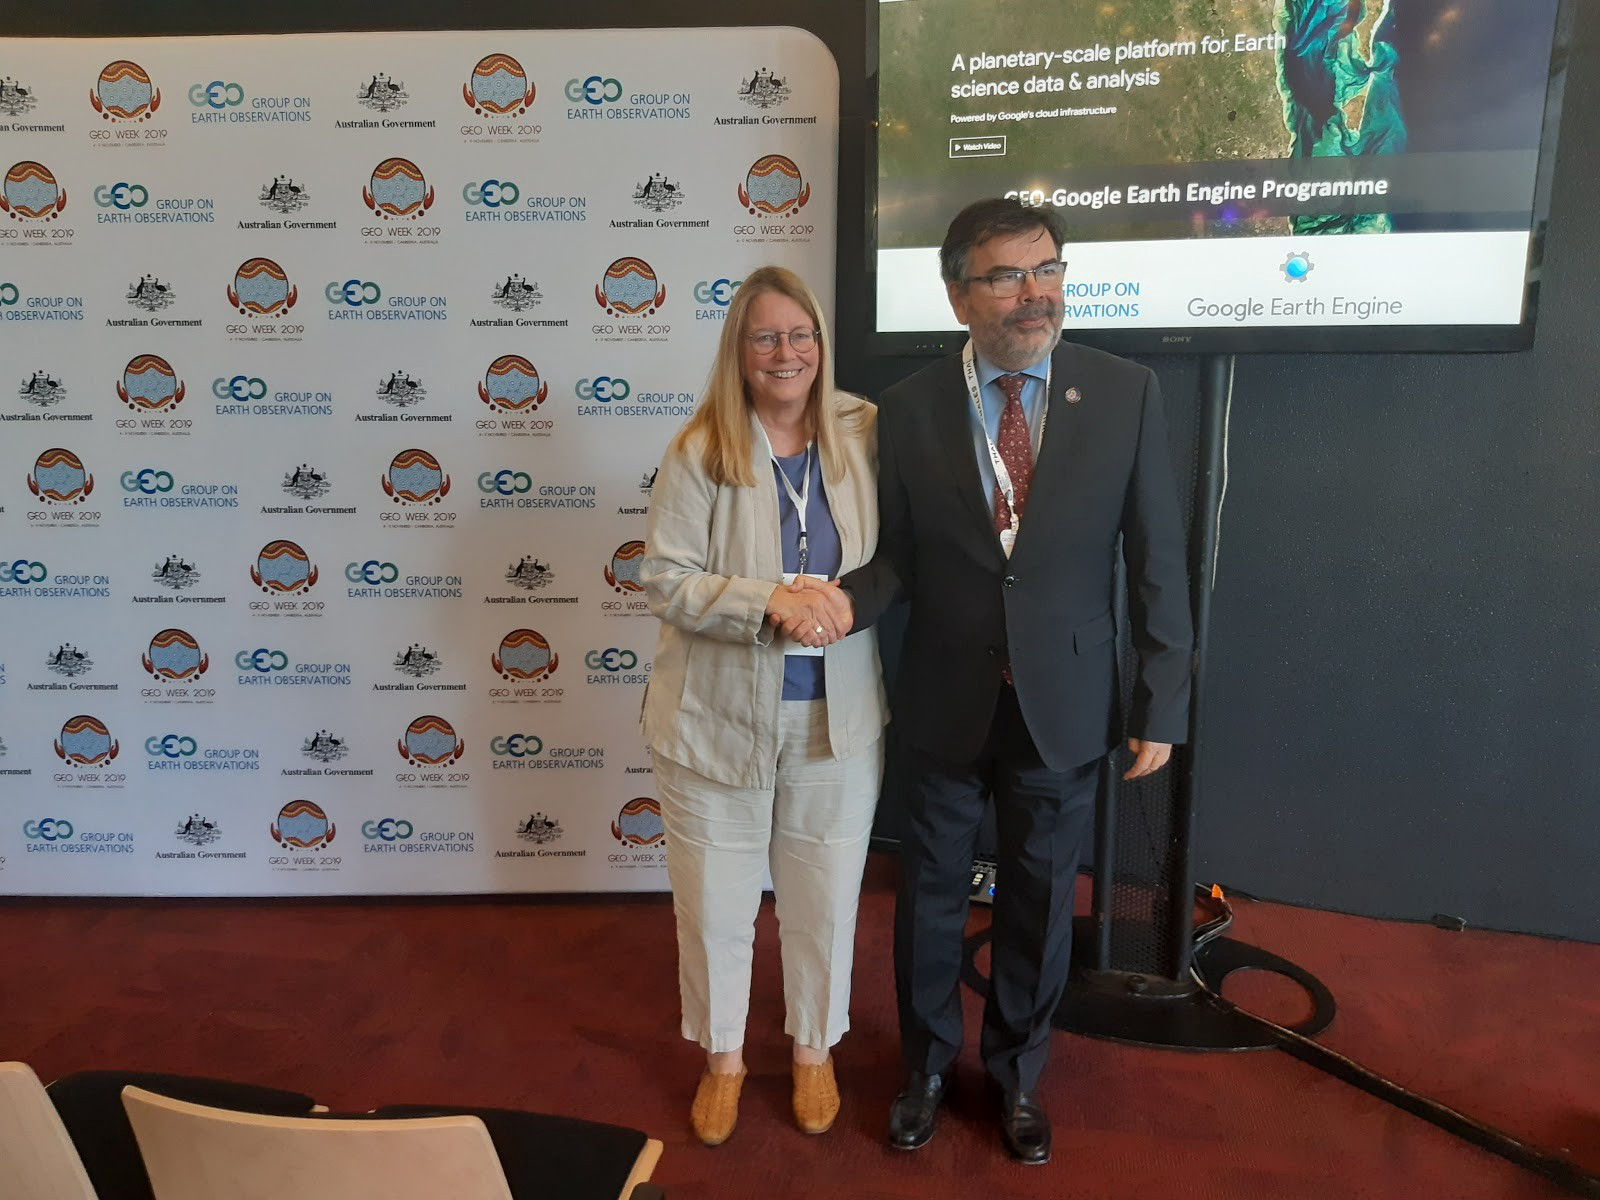 Rebecca Moore, Director of Google Earth Engine, and Gilberto Camara, Director of the Secretariat for GEO, announce the new GEO Google Earth Engine program.